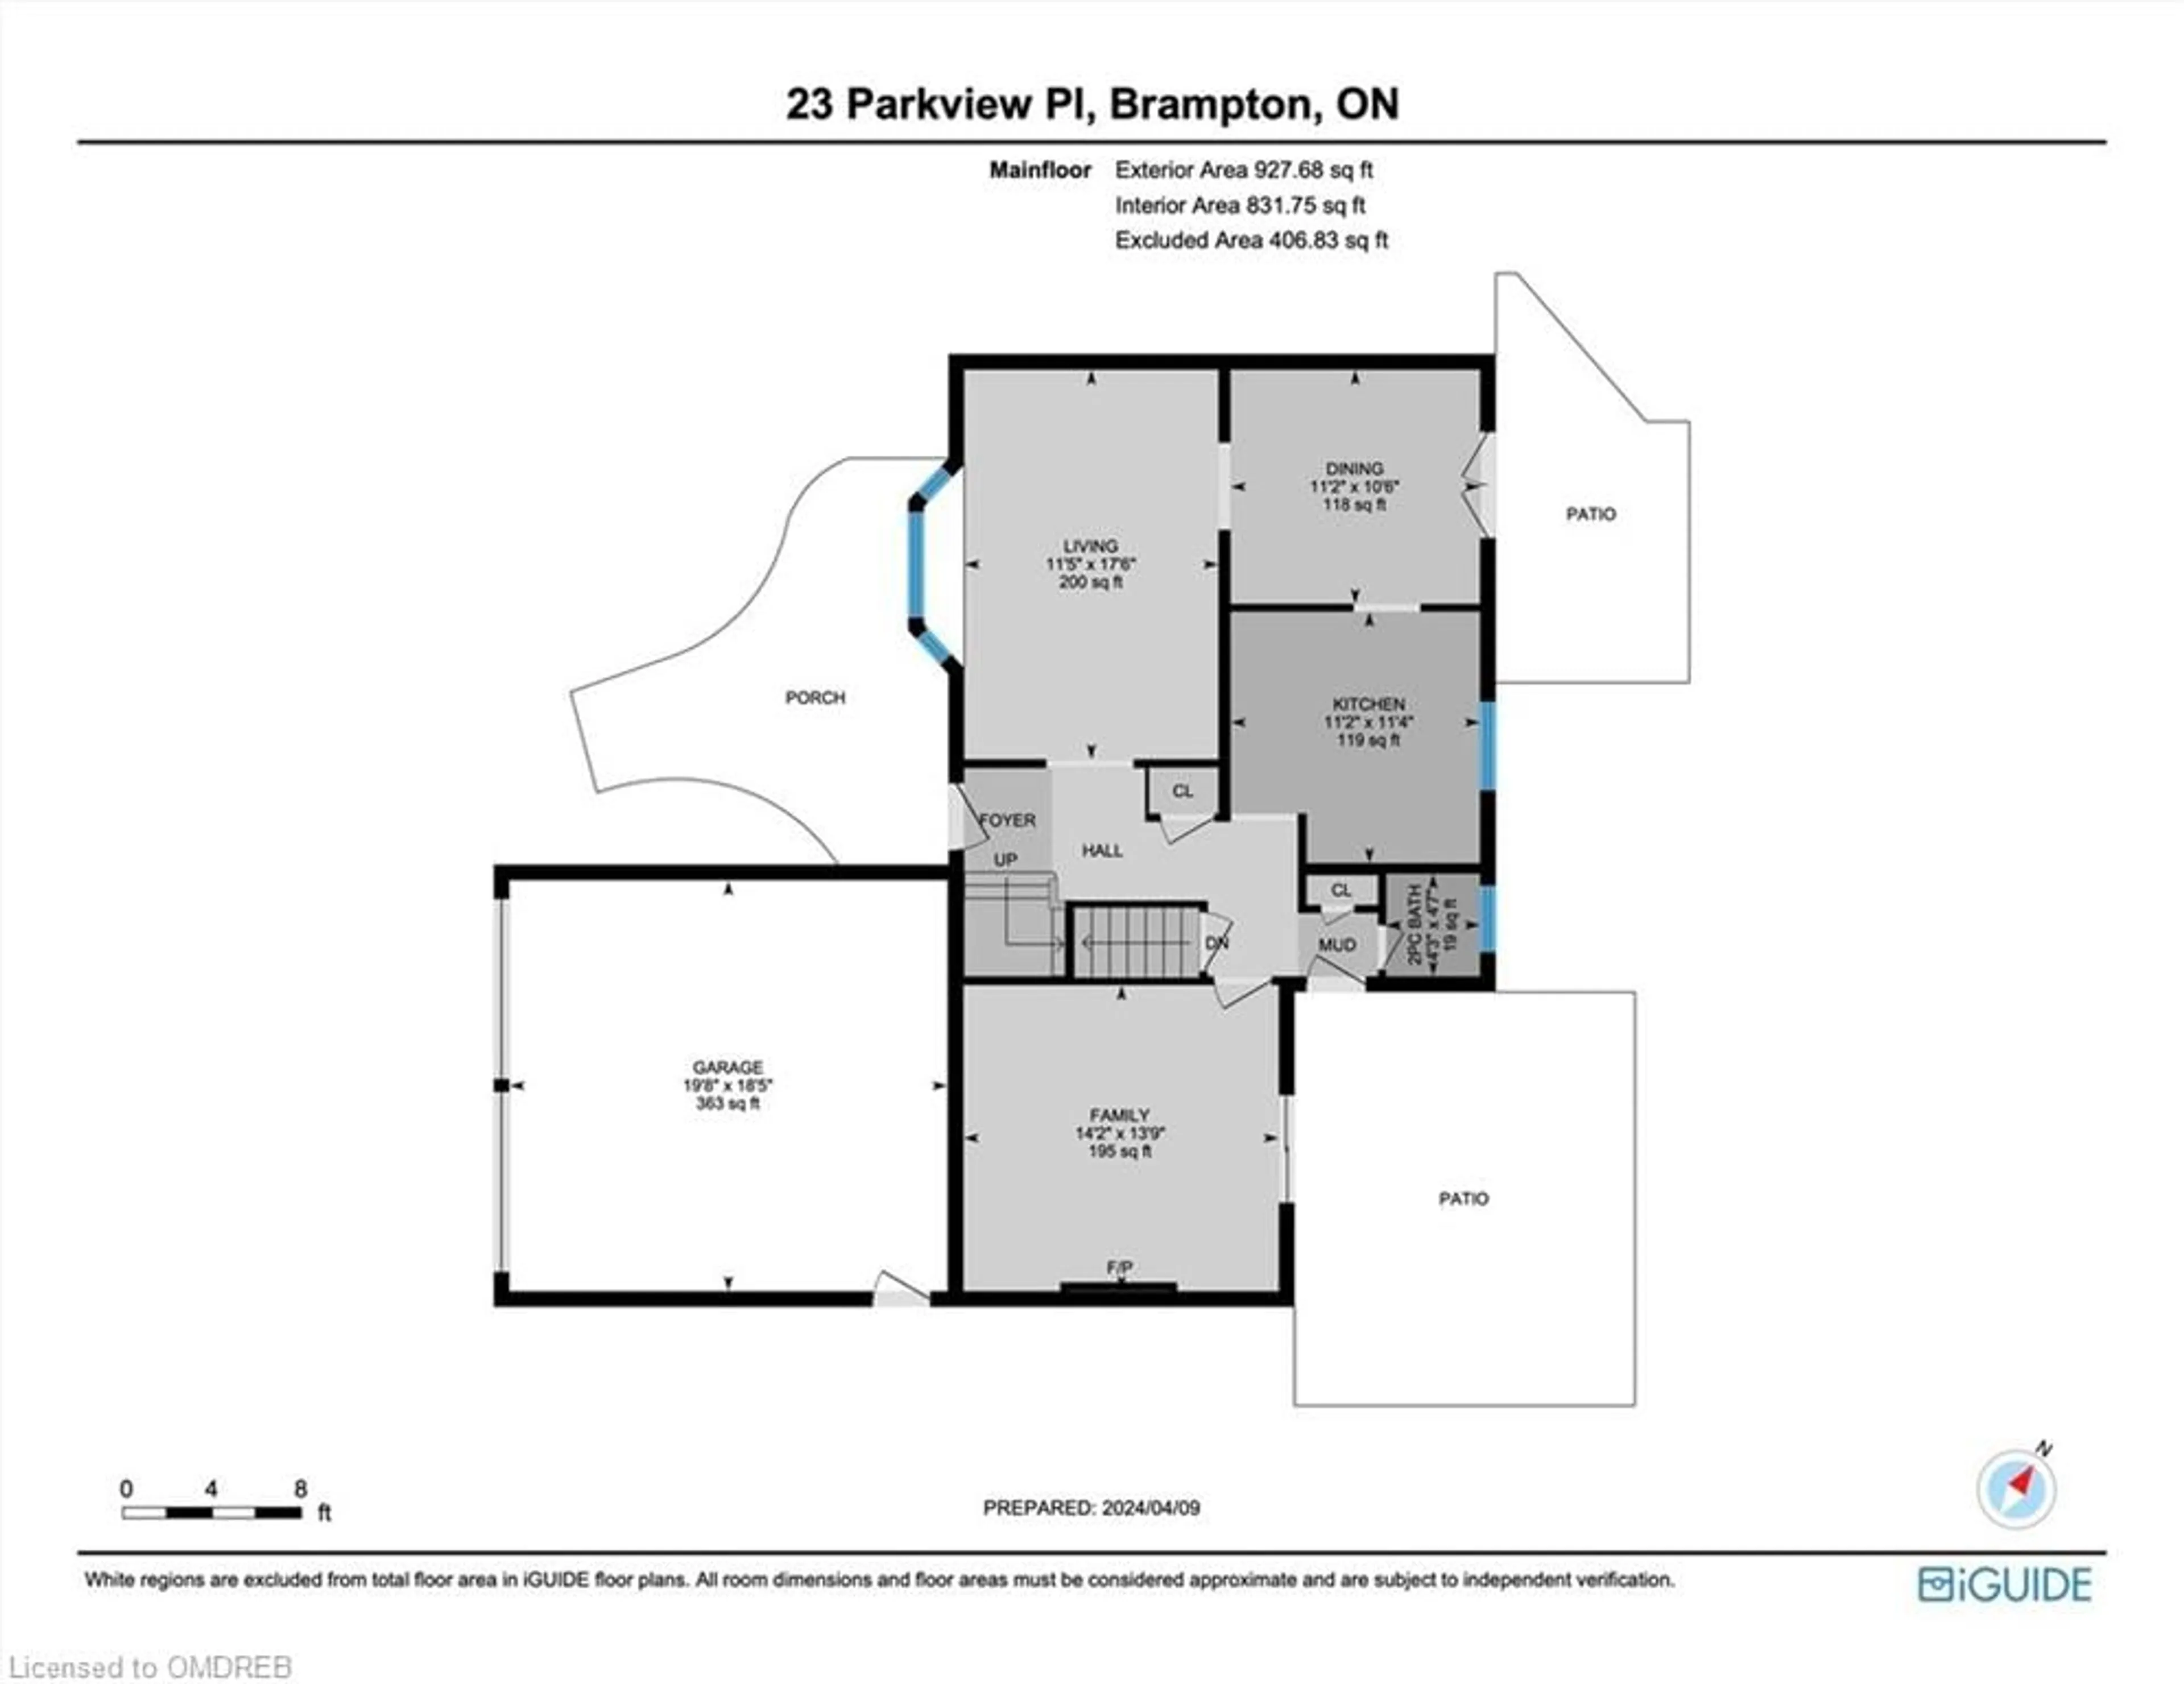 Floor plan for 23 Parkview Pl, Brampton Ontario L6W 2G2